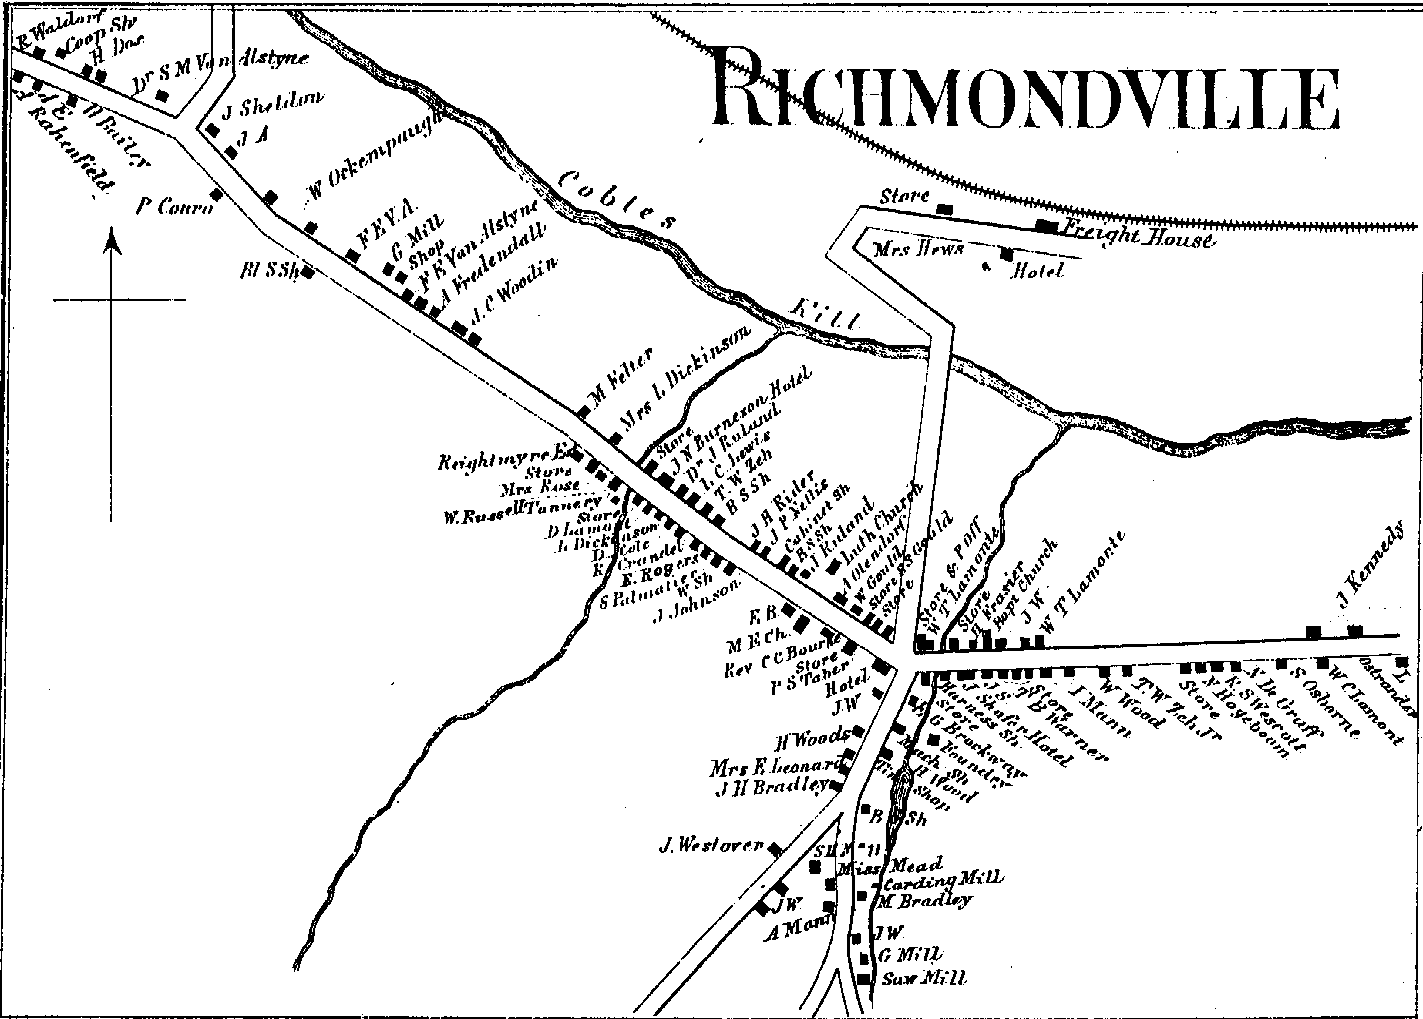 1866 Map - Village of Richmondville, with surnames